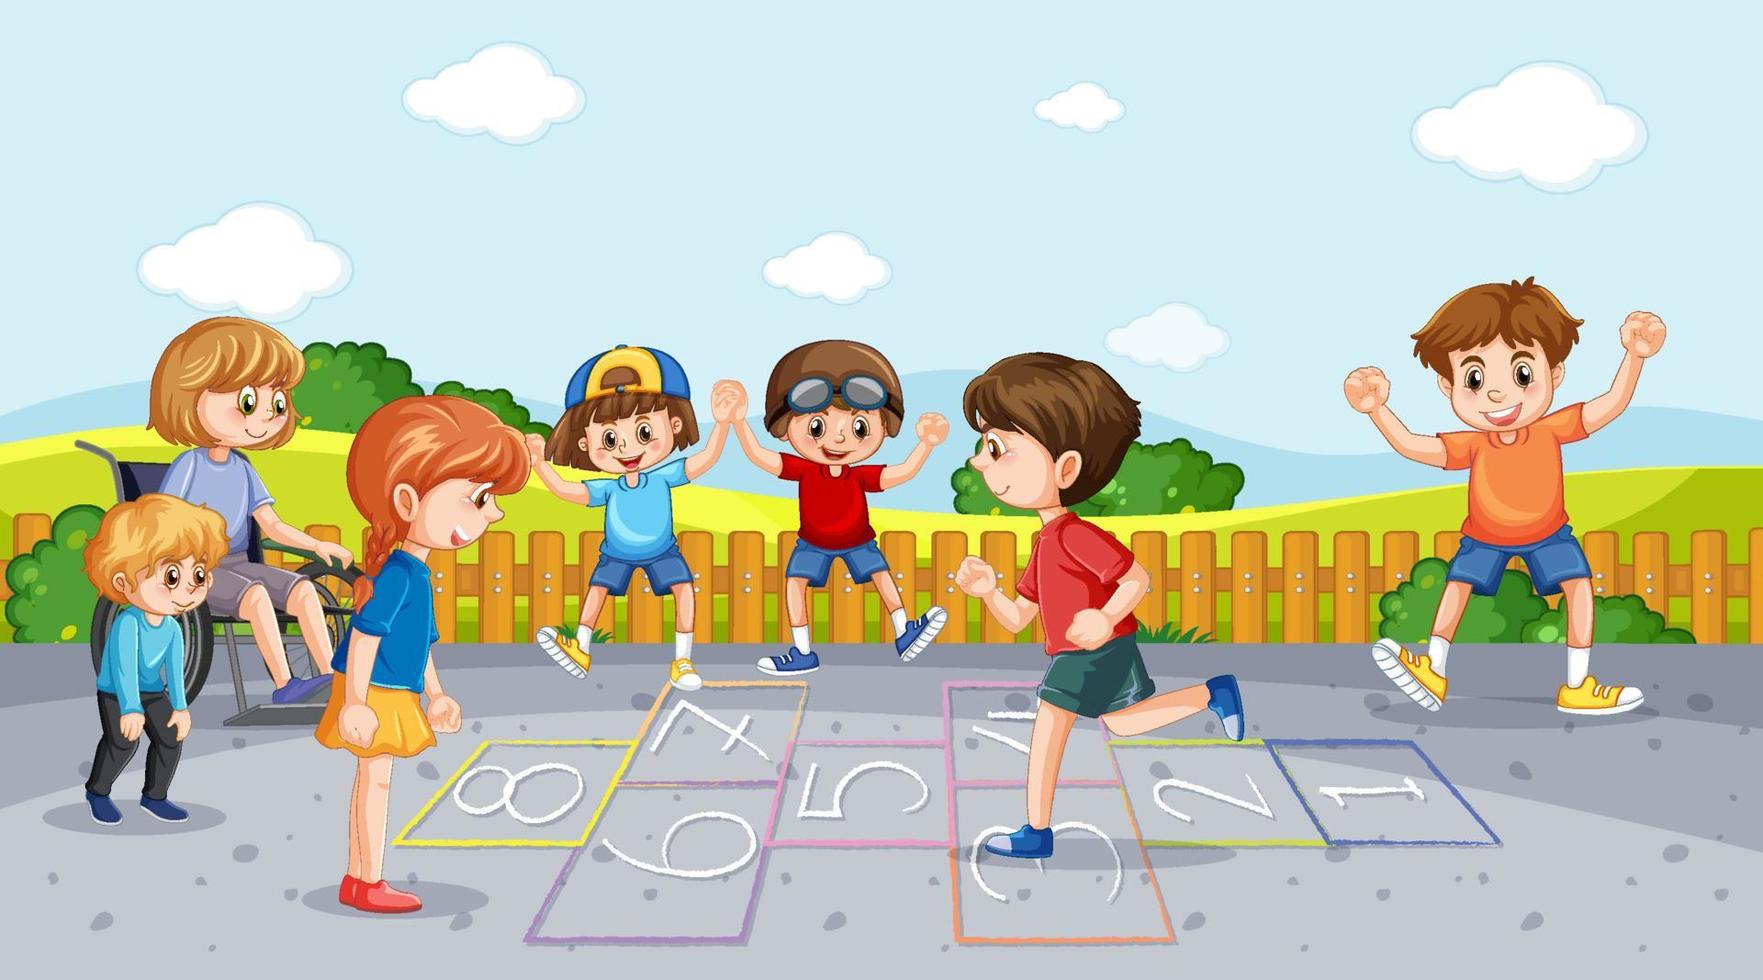 glada barn leker hopscotch på lekplatsen vektor